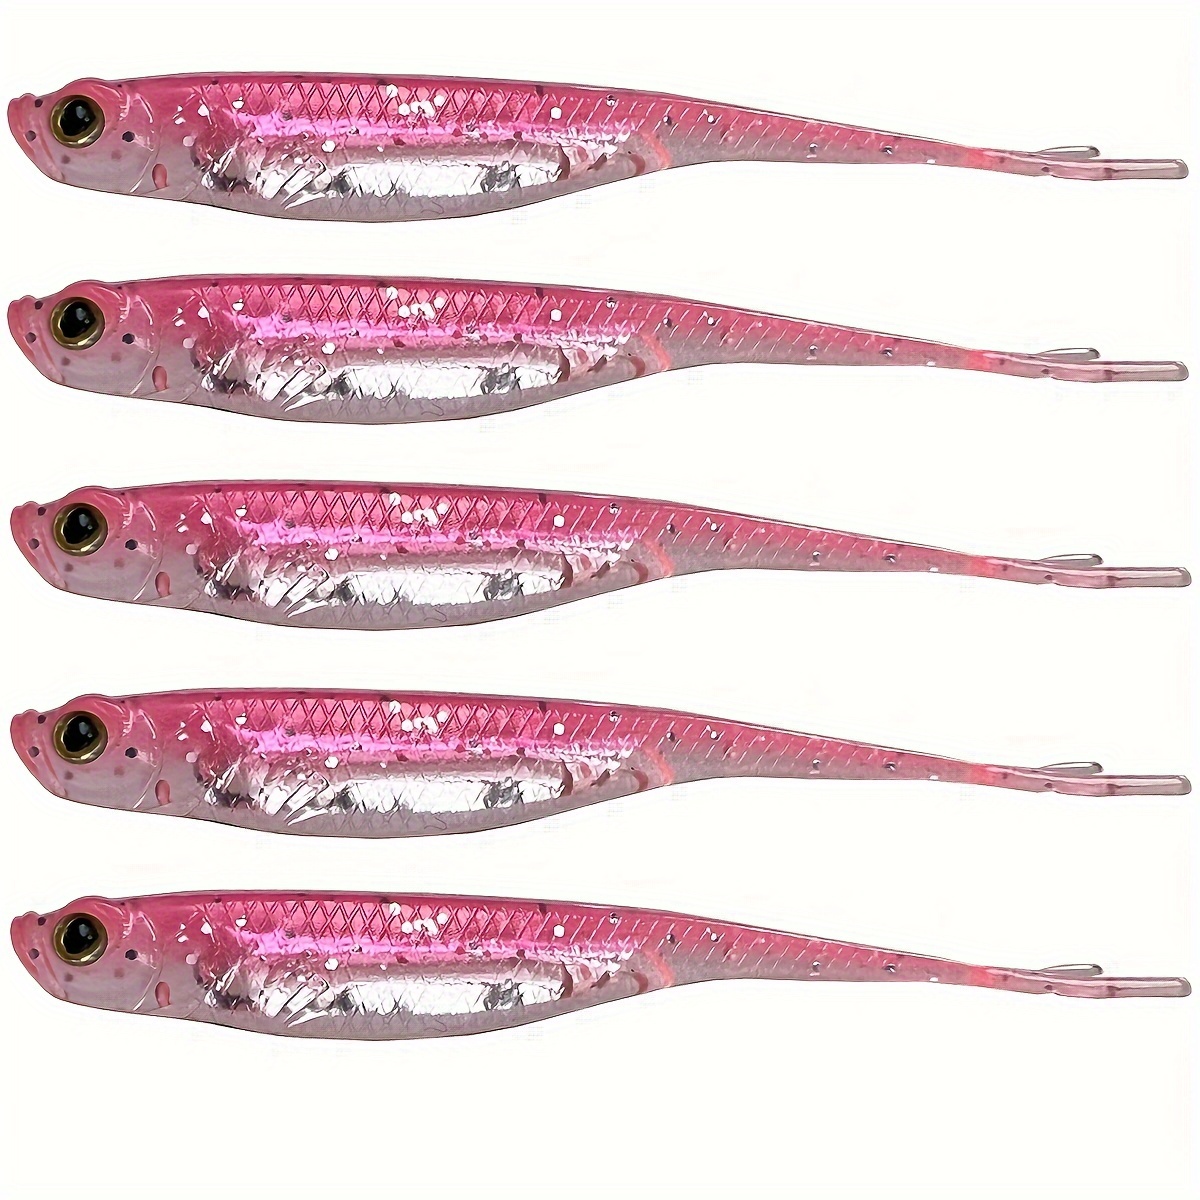 B.s. Fish Tales Super Bait Cut Plug 3 inch, Hot Pink